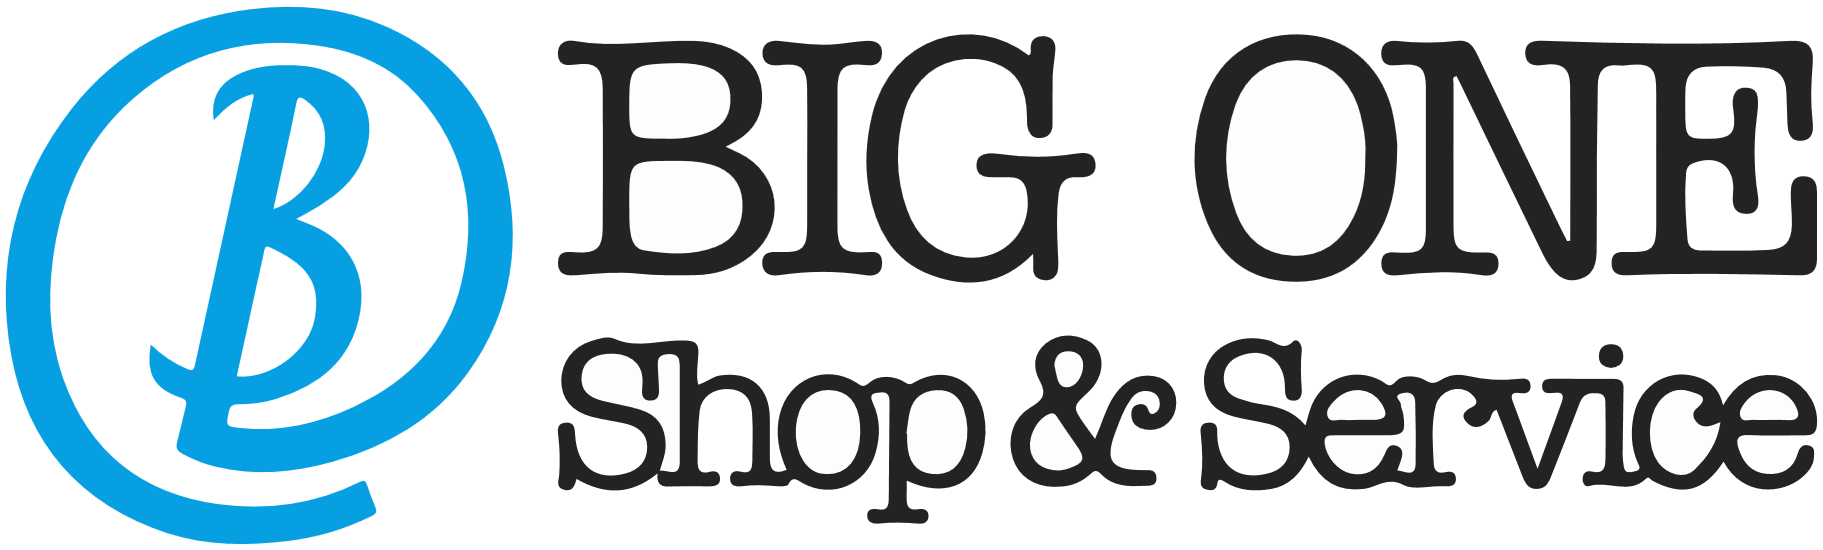 Big One Shop Logo Header